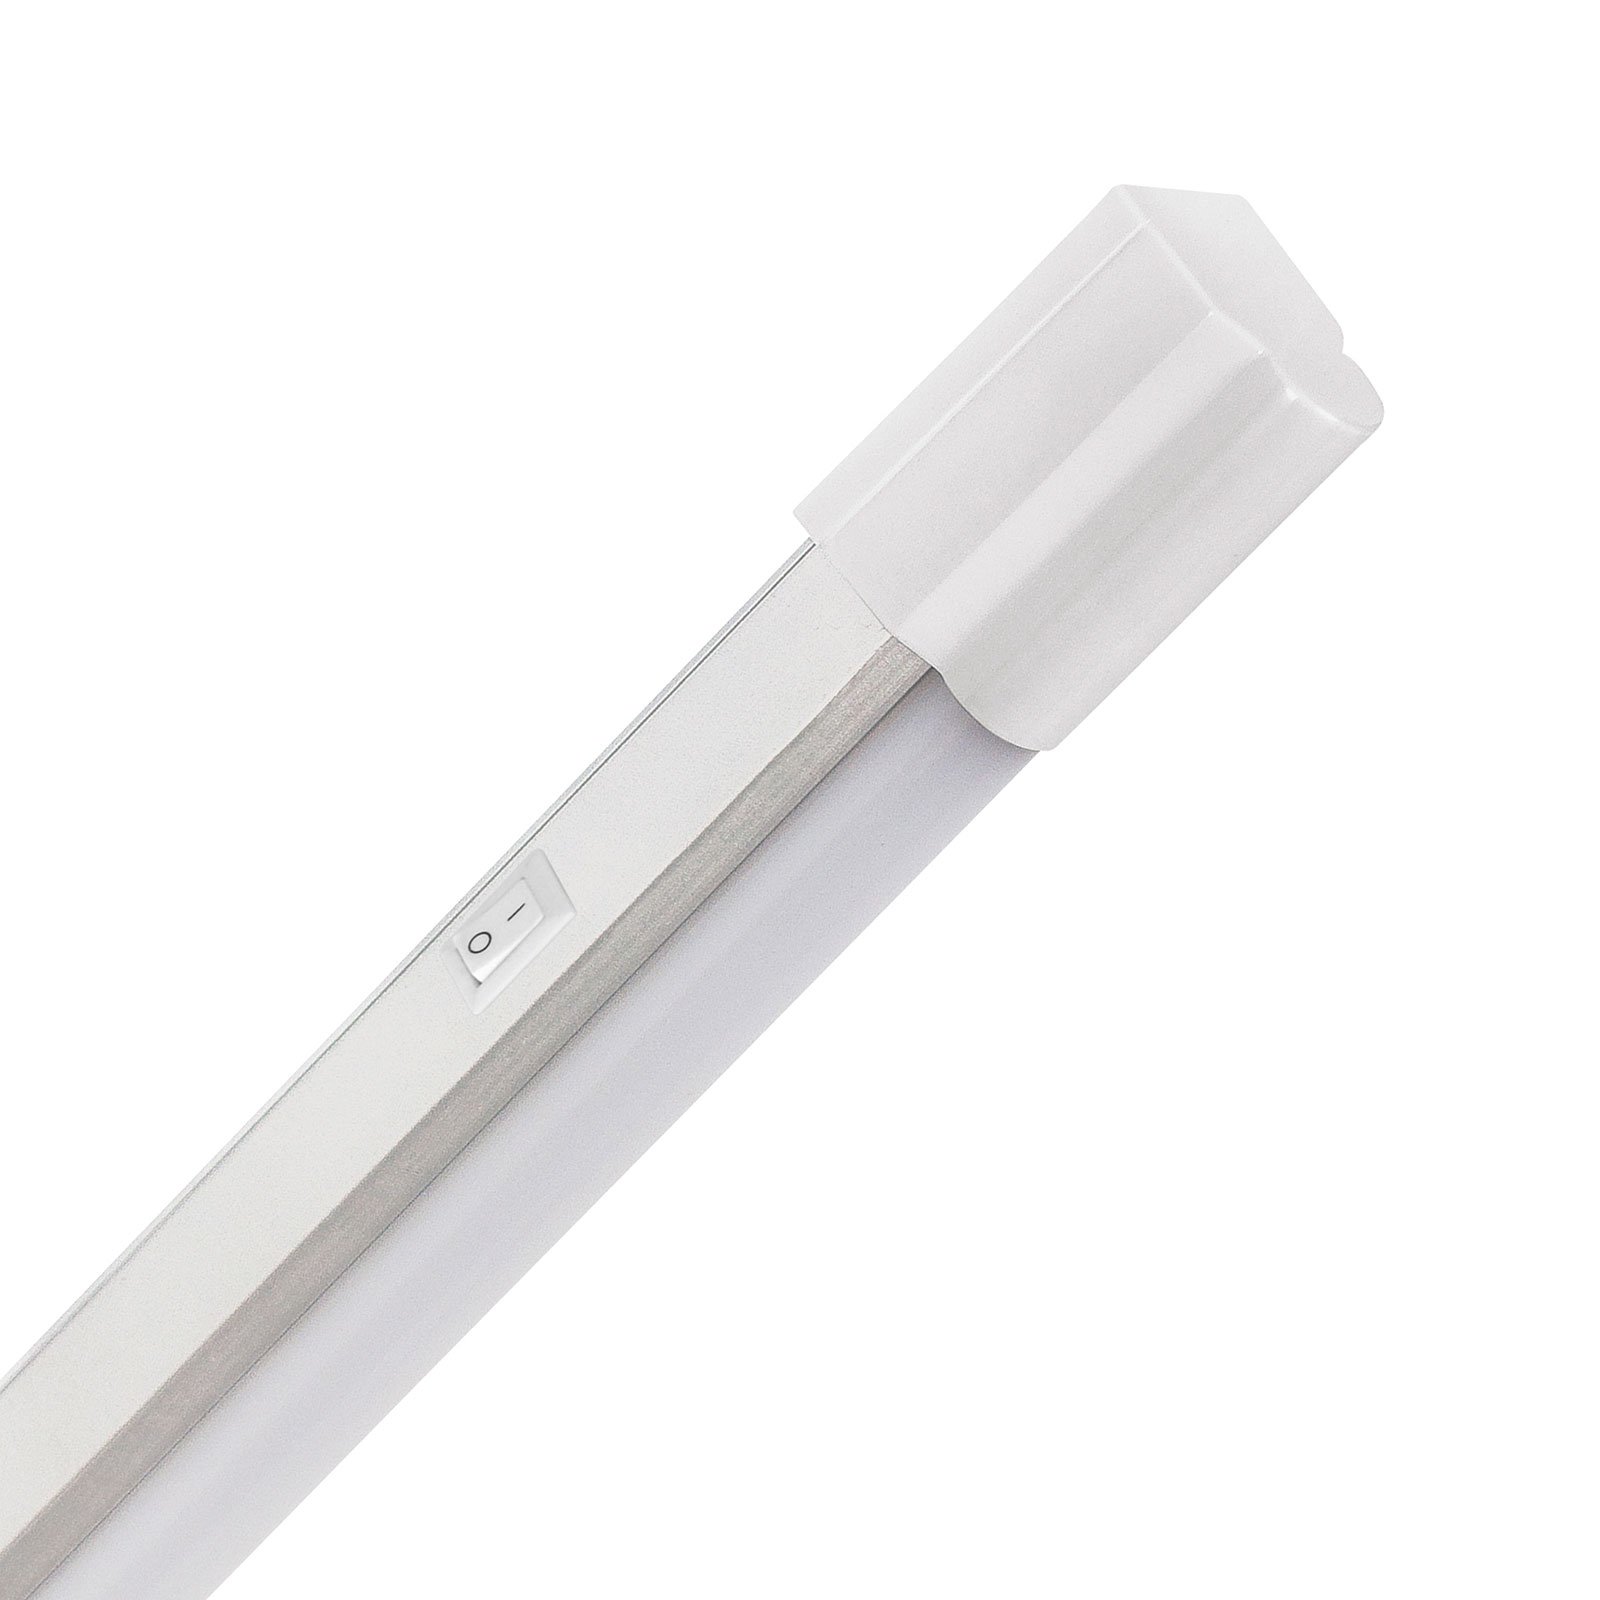 LED-kaapinalusvalaisin Arax 45, 42,6 cm, 4 W